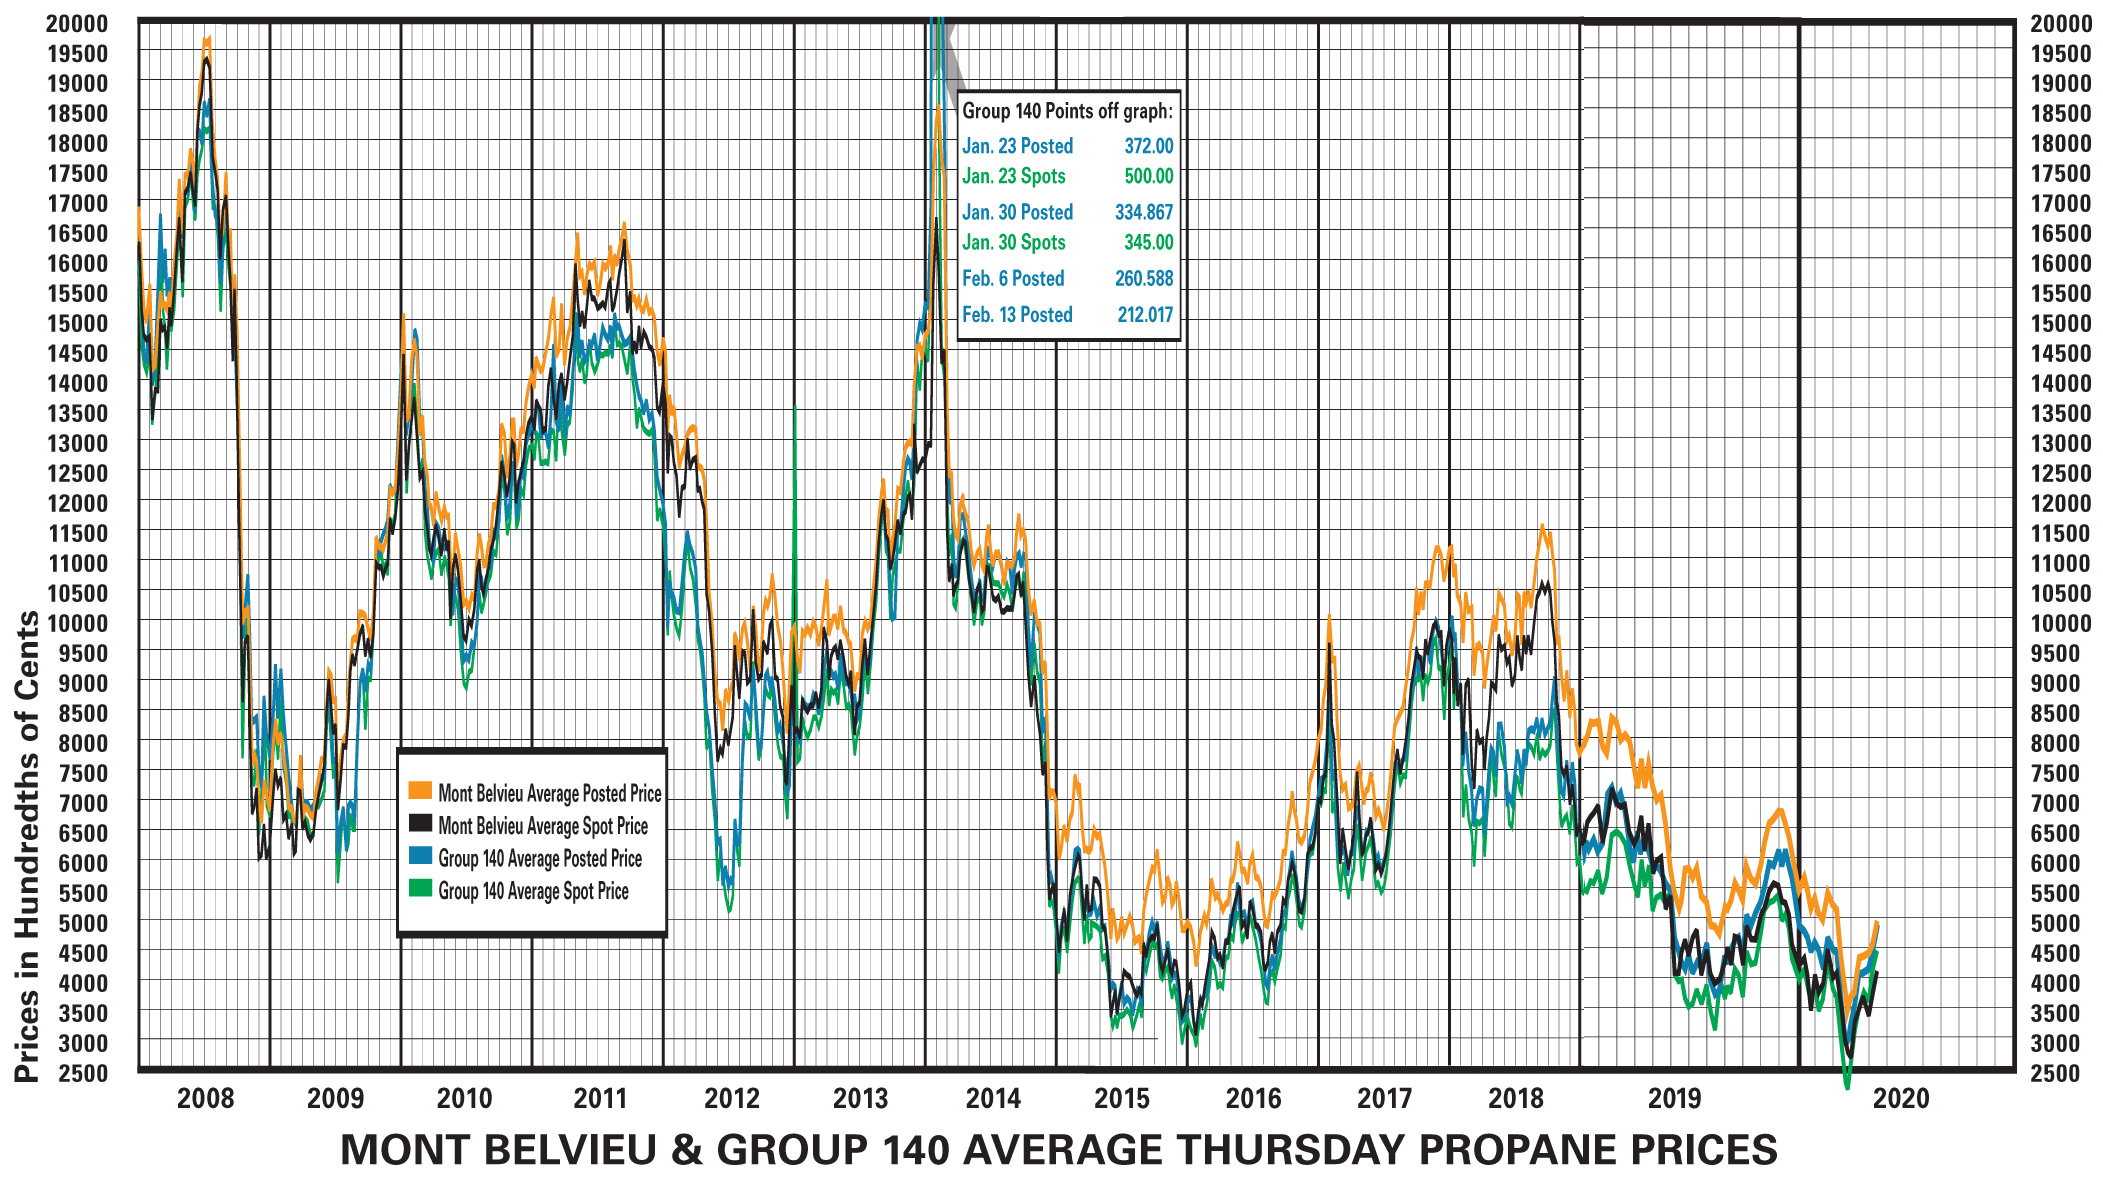 NL BigGraph May 300 Propane prices pushing upward reports Weekly Propane Newsletter 051420